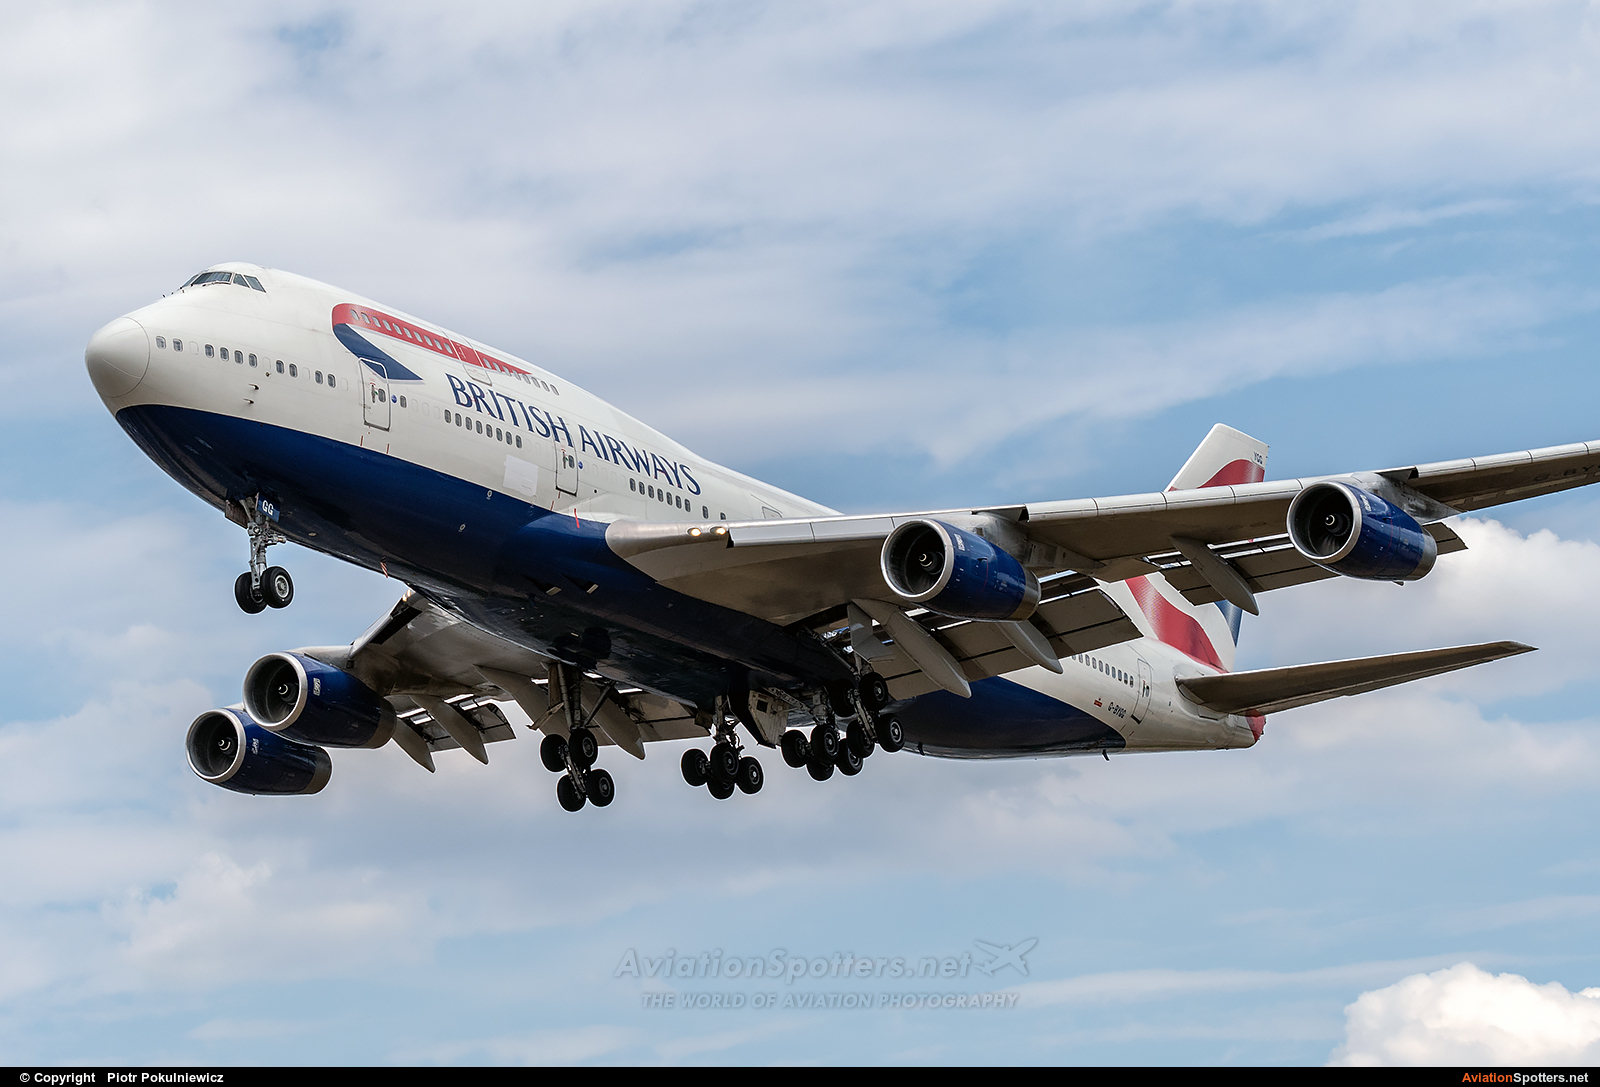 British Airways  -  747-400  (G-BYGG) By Piotr Pokulniewicz (Piciu)